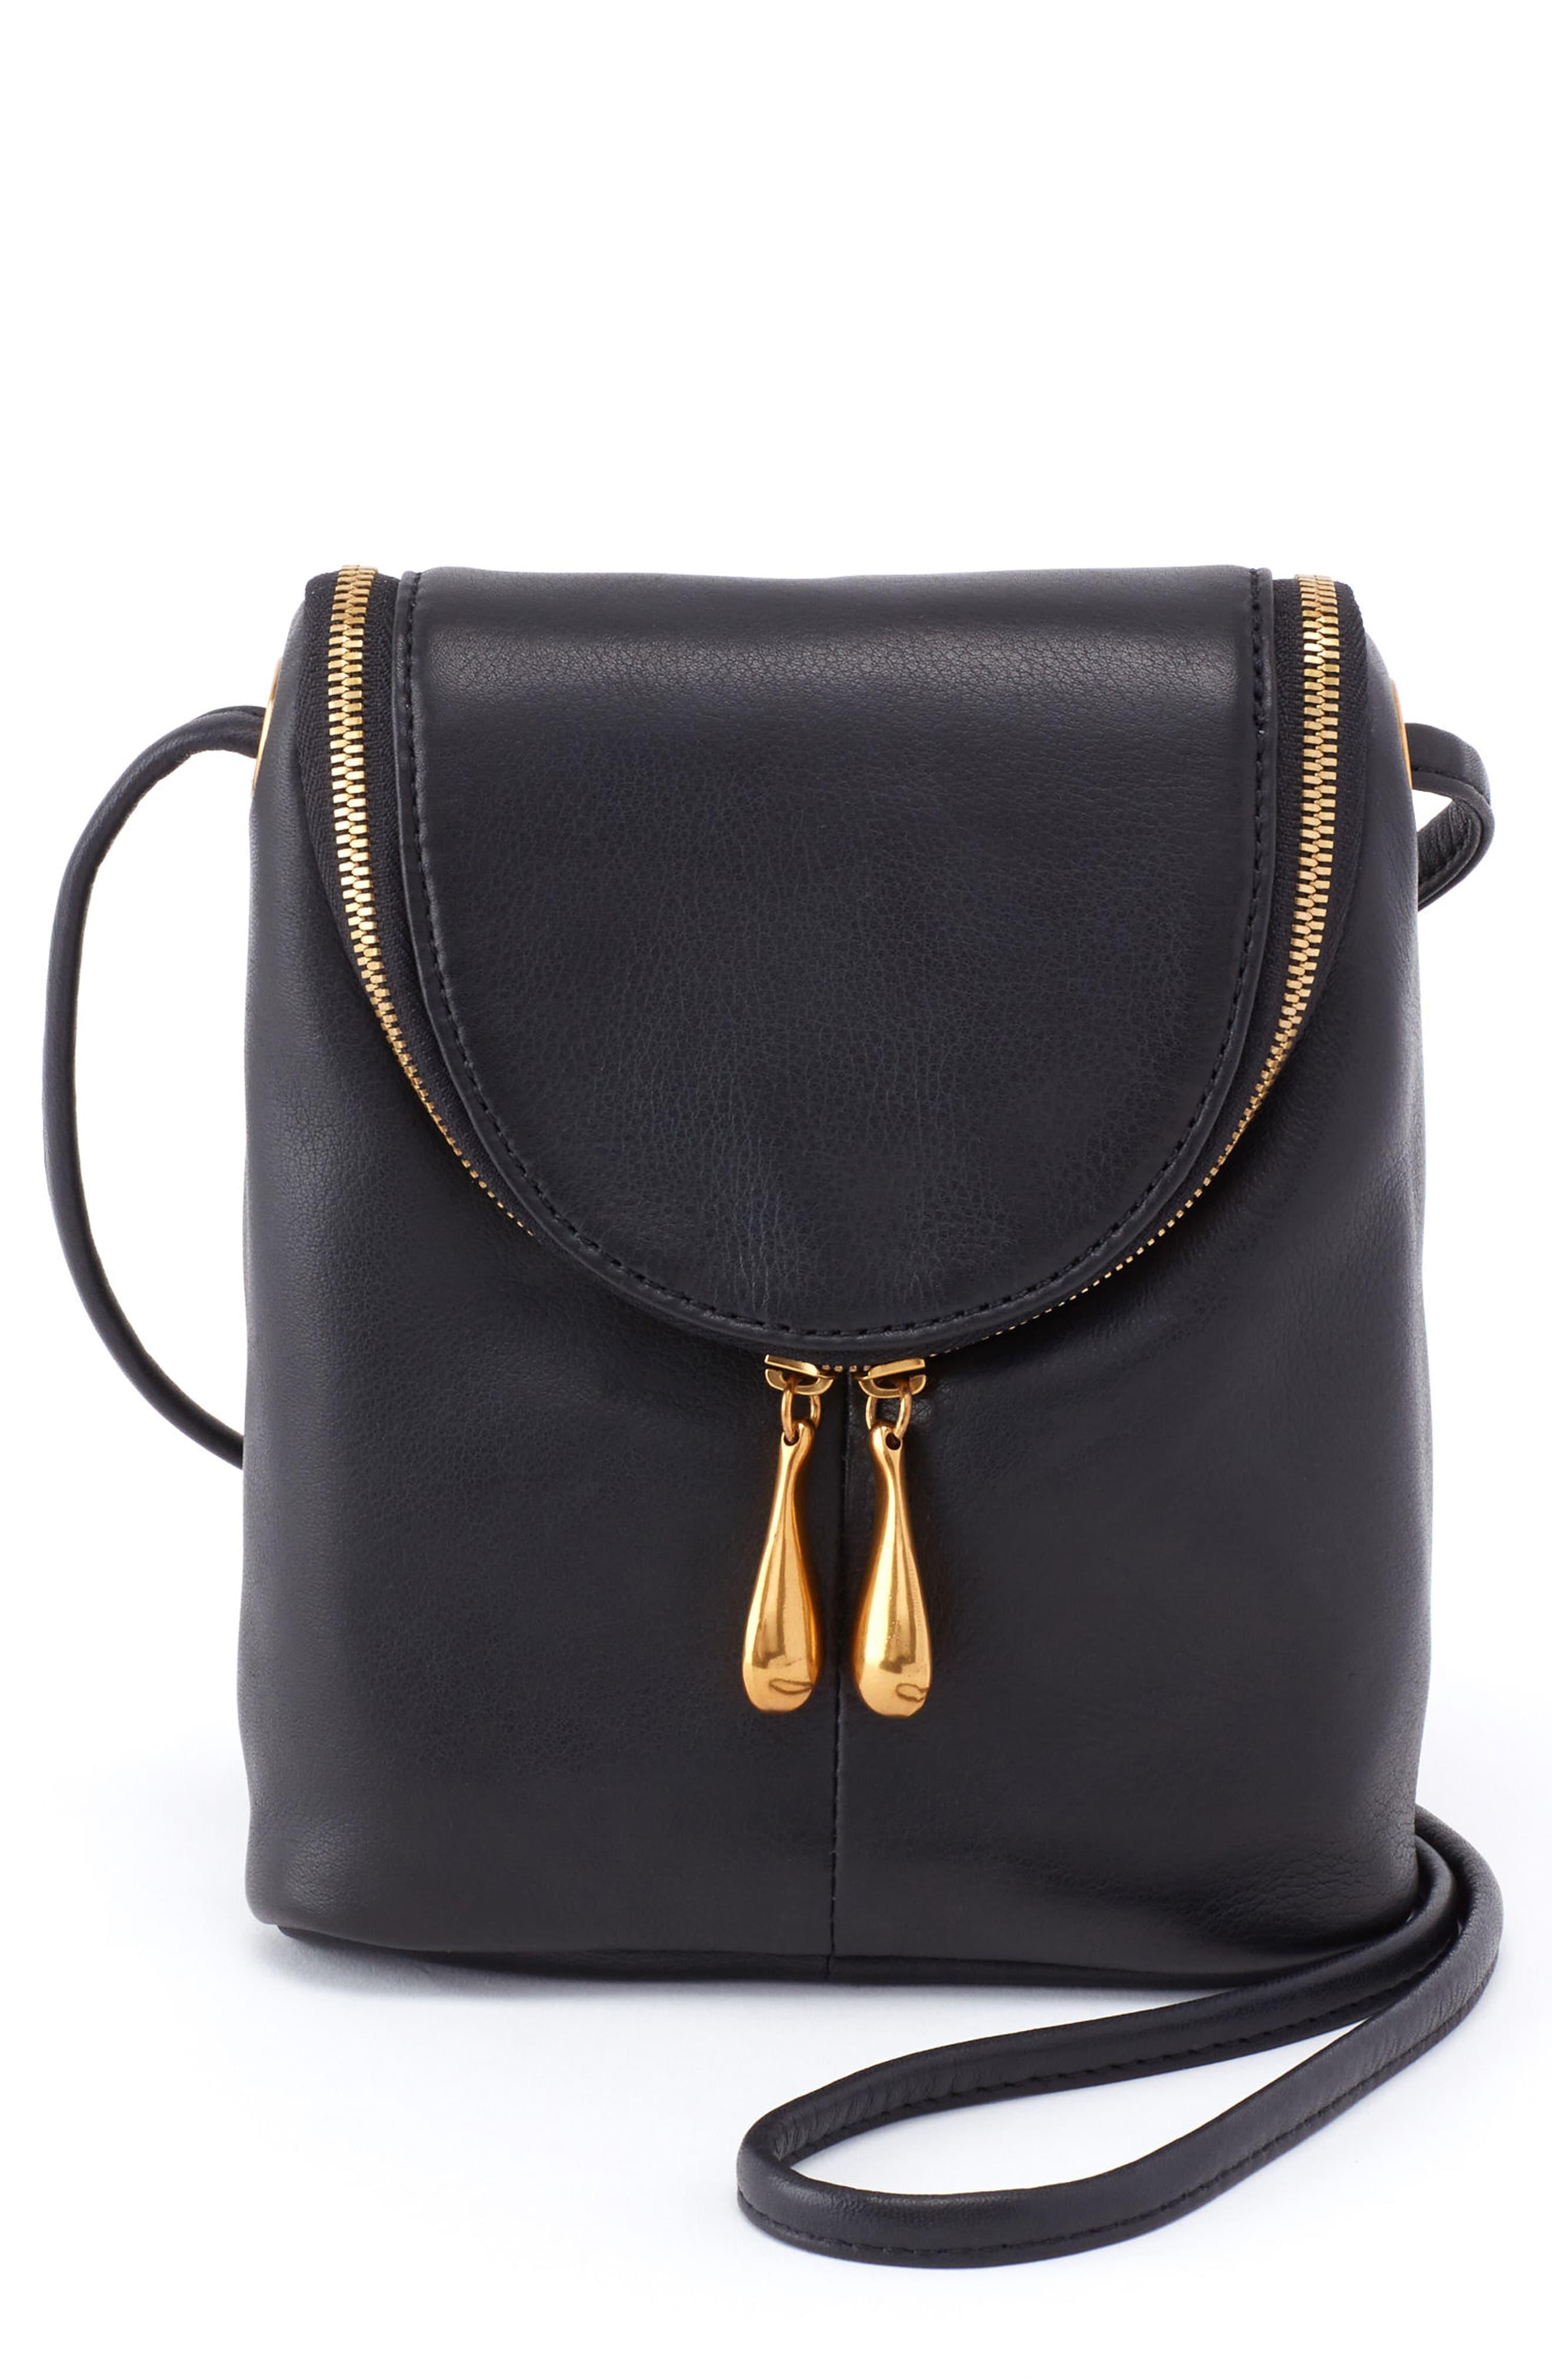 Hobo Fern Zip Flap Mini Leather Crossbody Bag in Black - Lyst